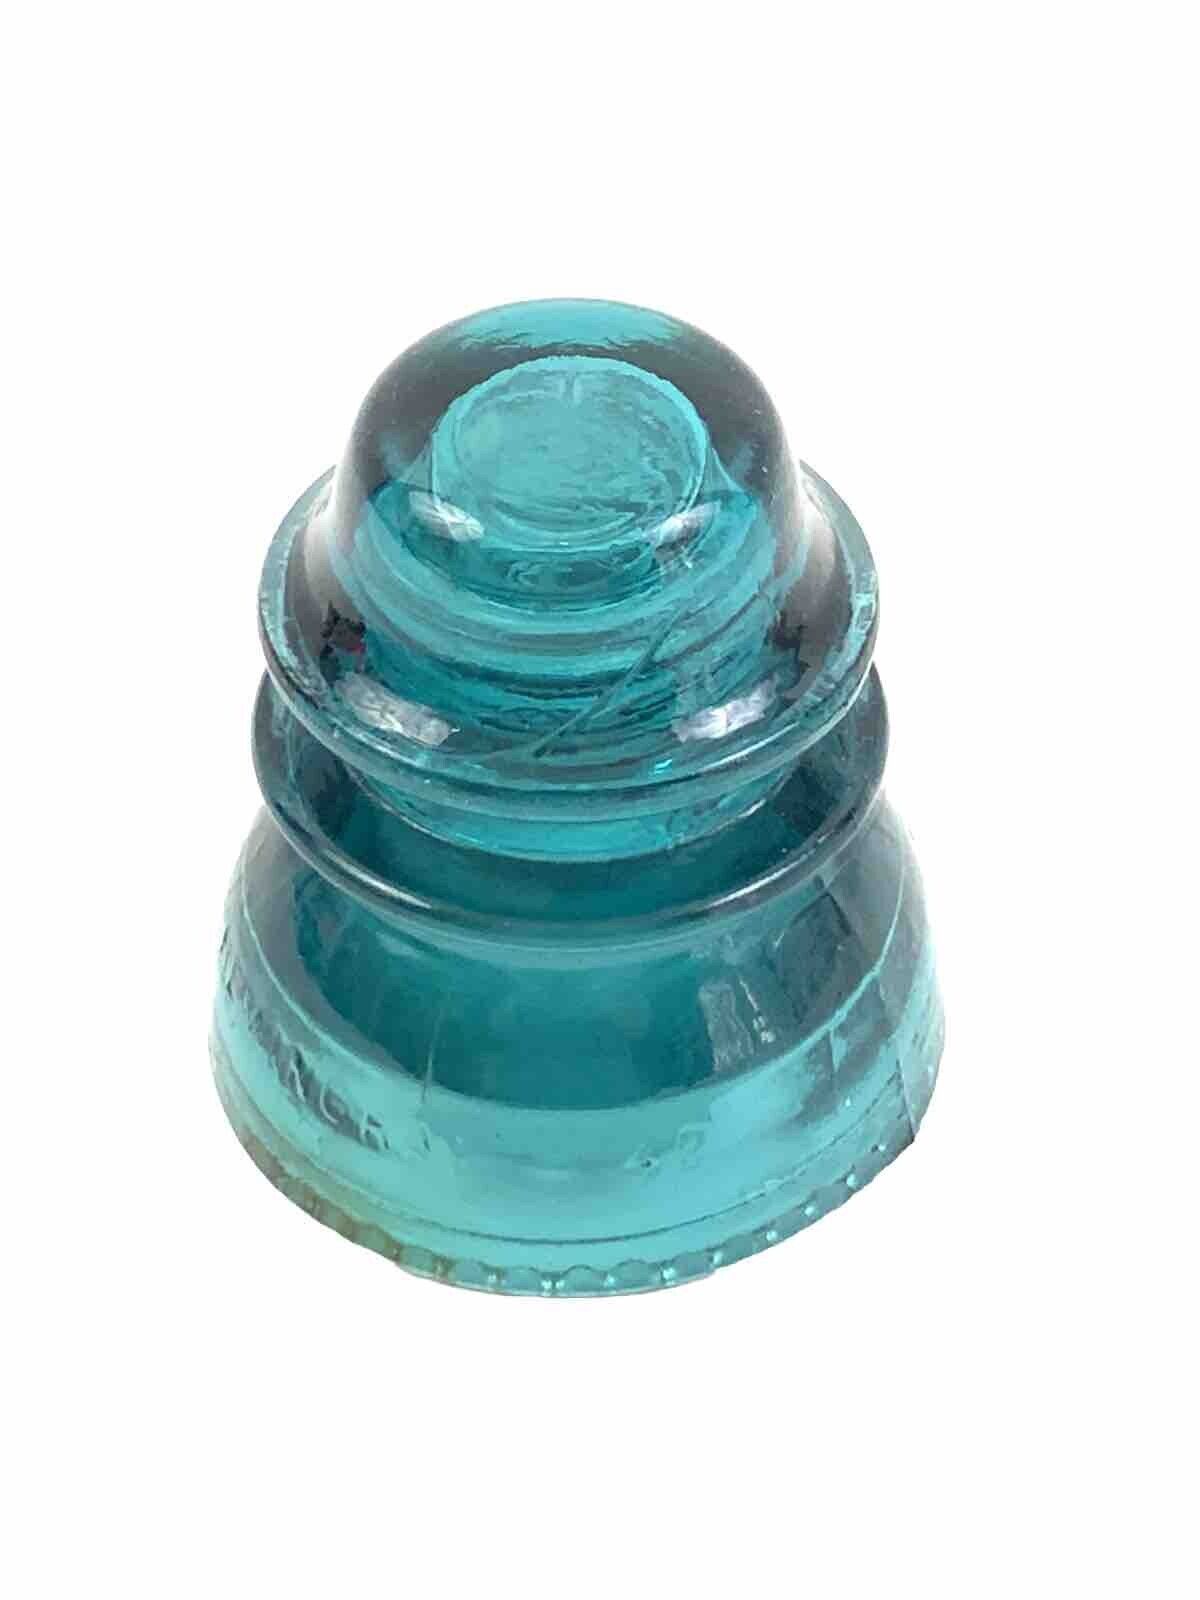 Vintage Teal Aqua Blue Green Hemingray 42 Glass Insulator #8274